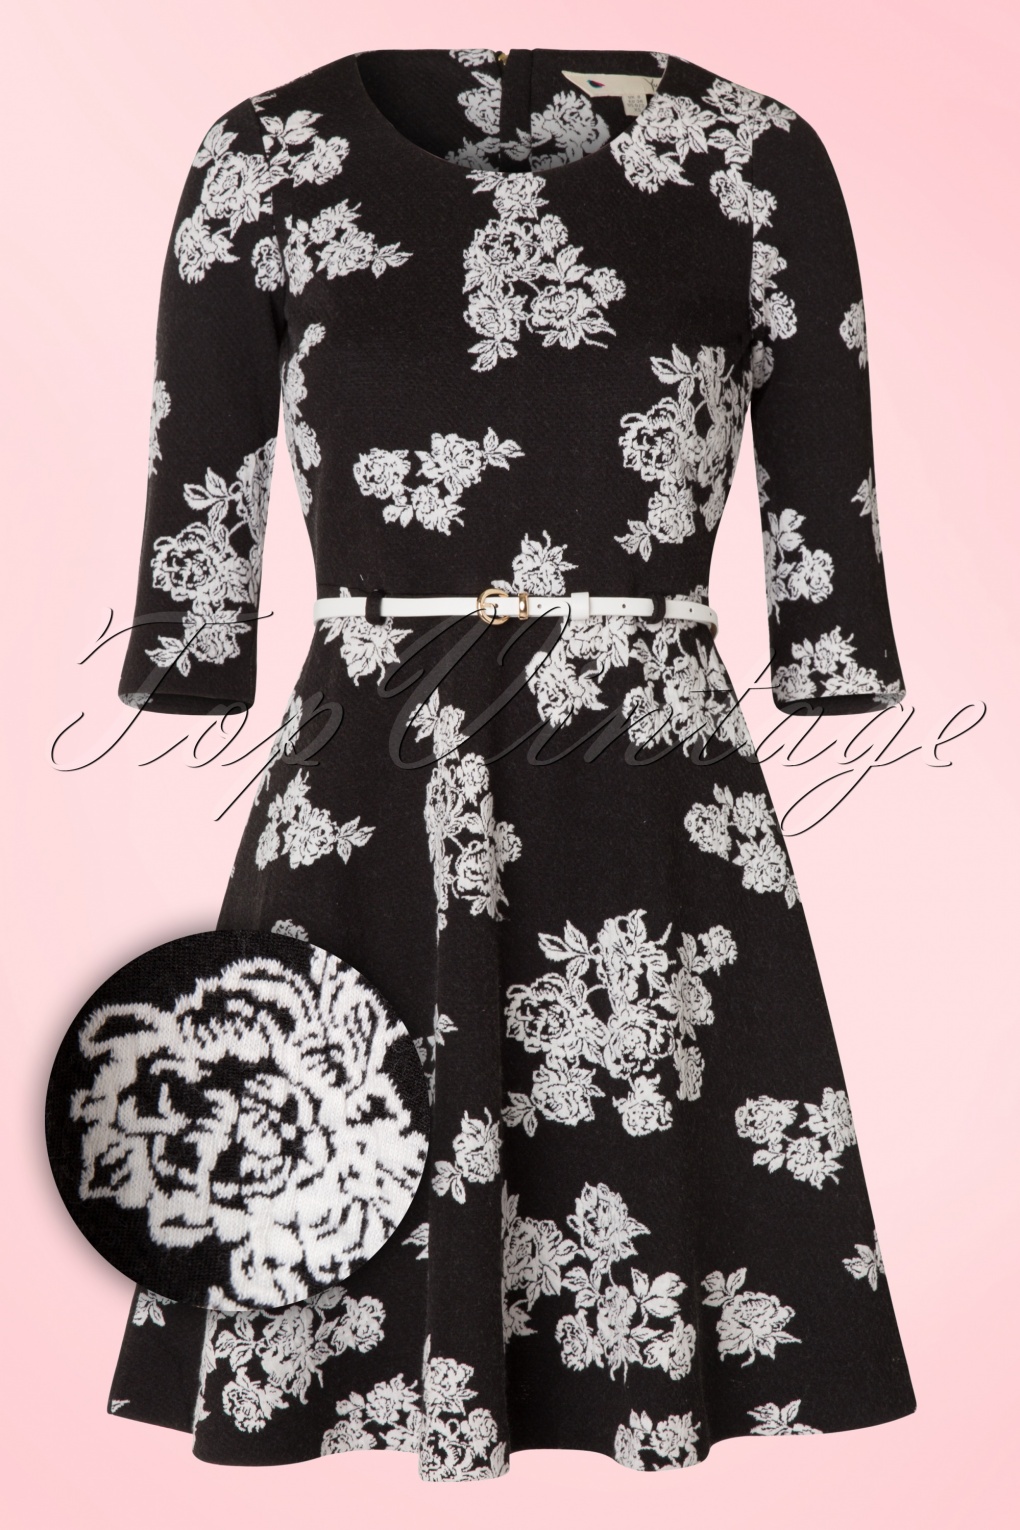 black and white rose dress